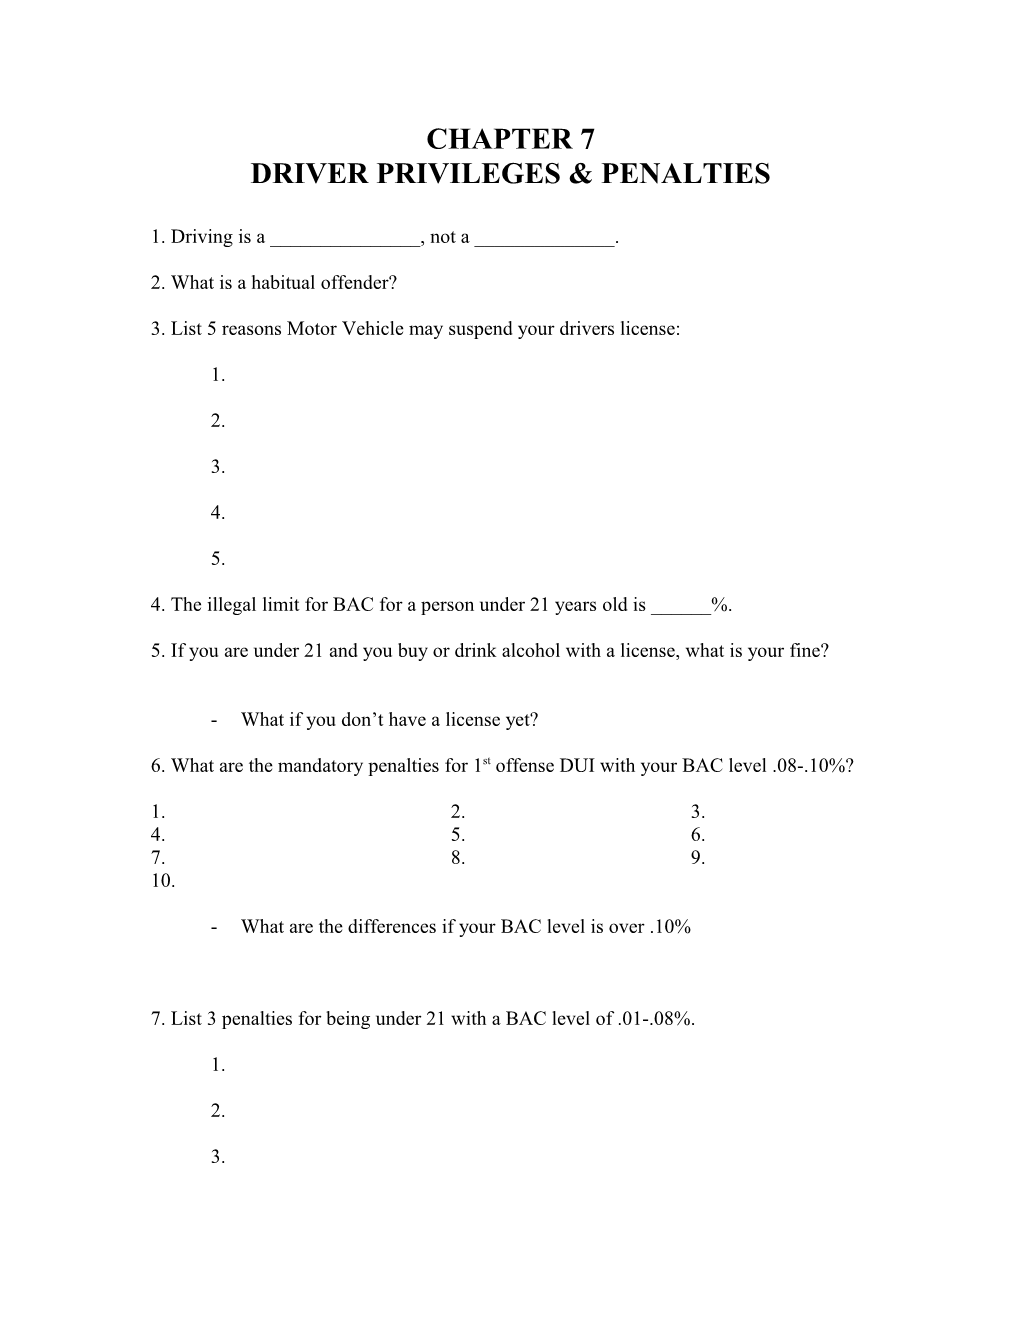 Driver Privileges & Penalties